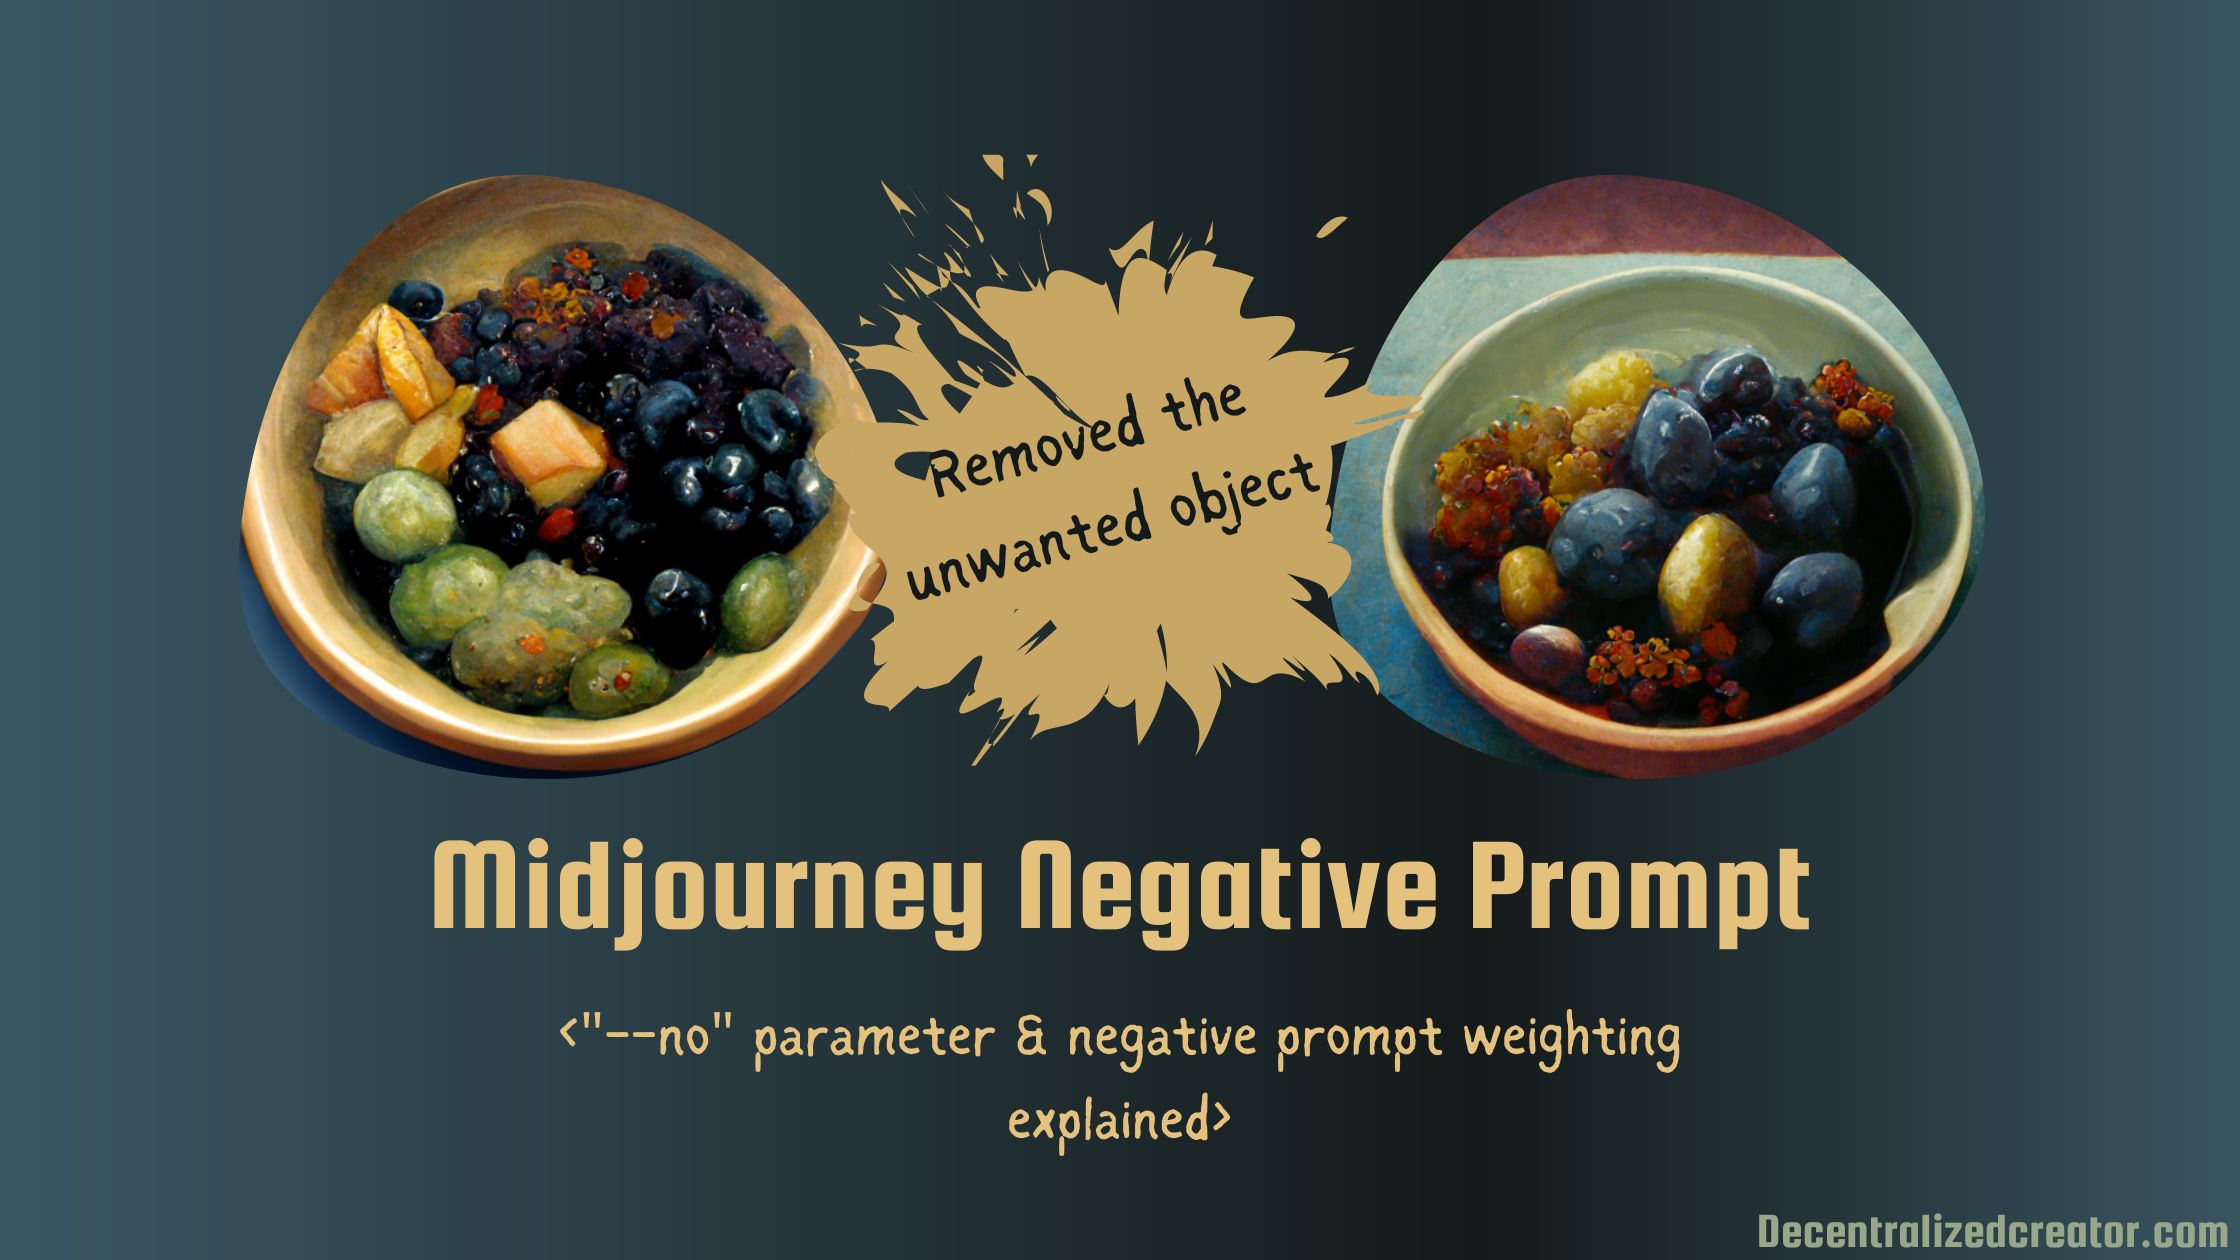 Midjourney Negative Prompt